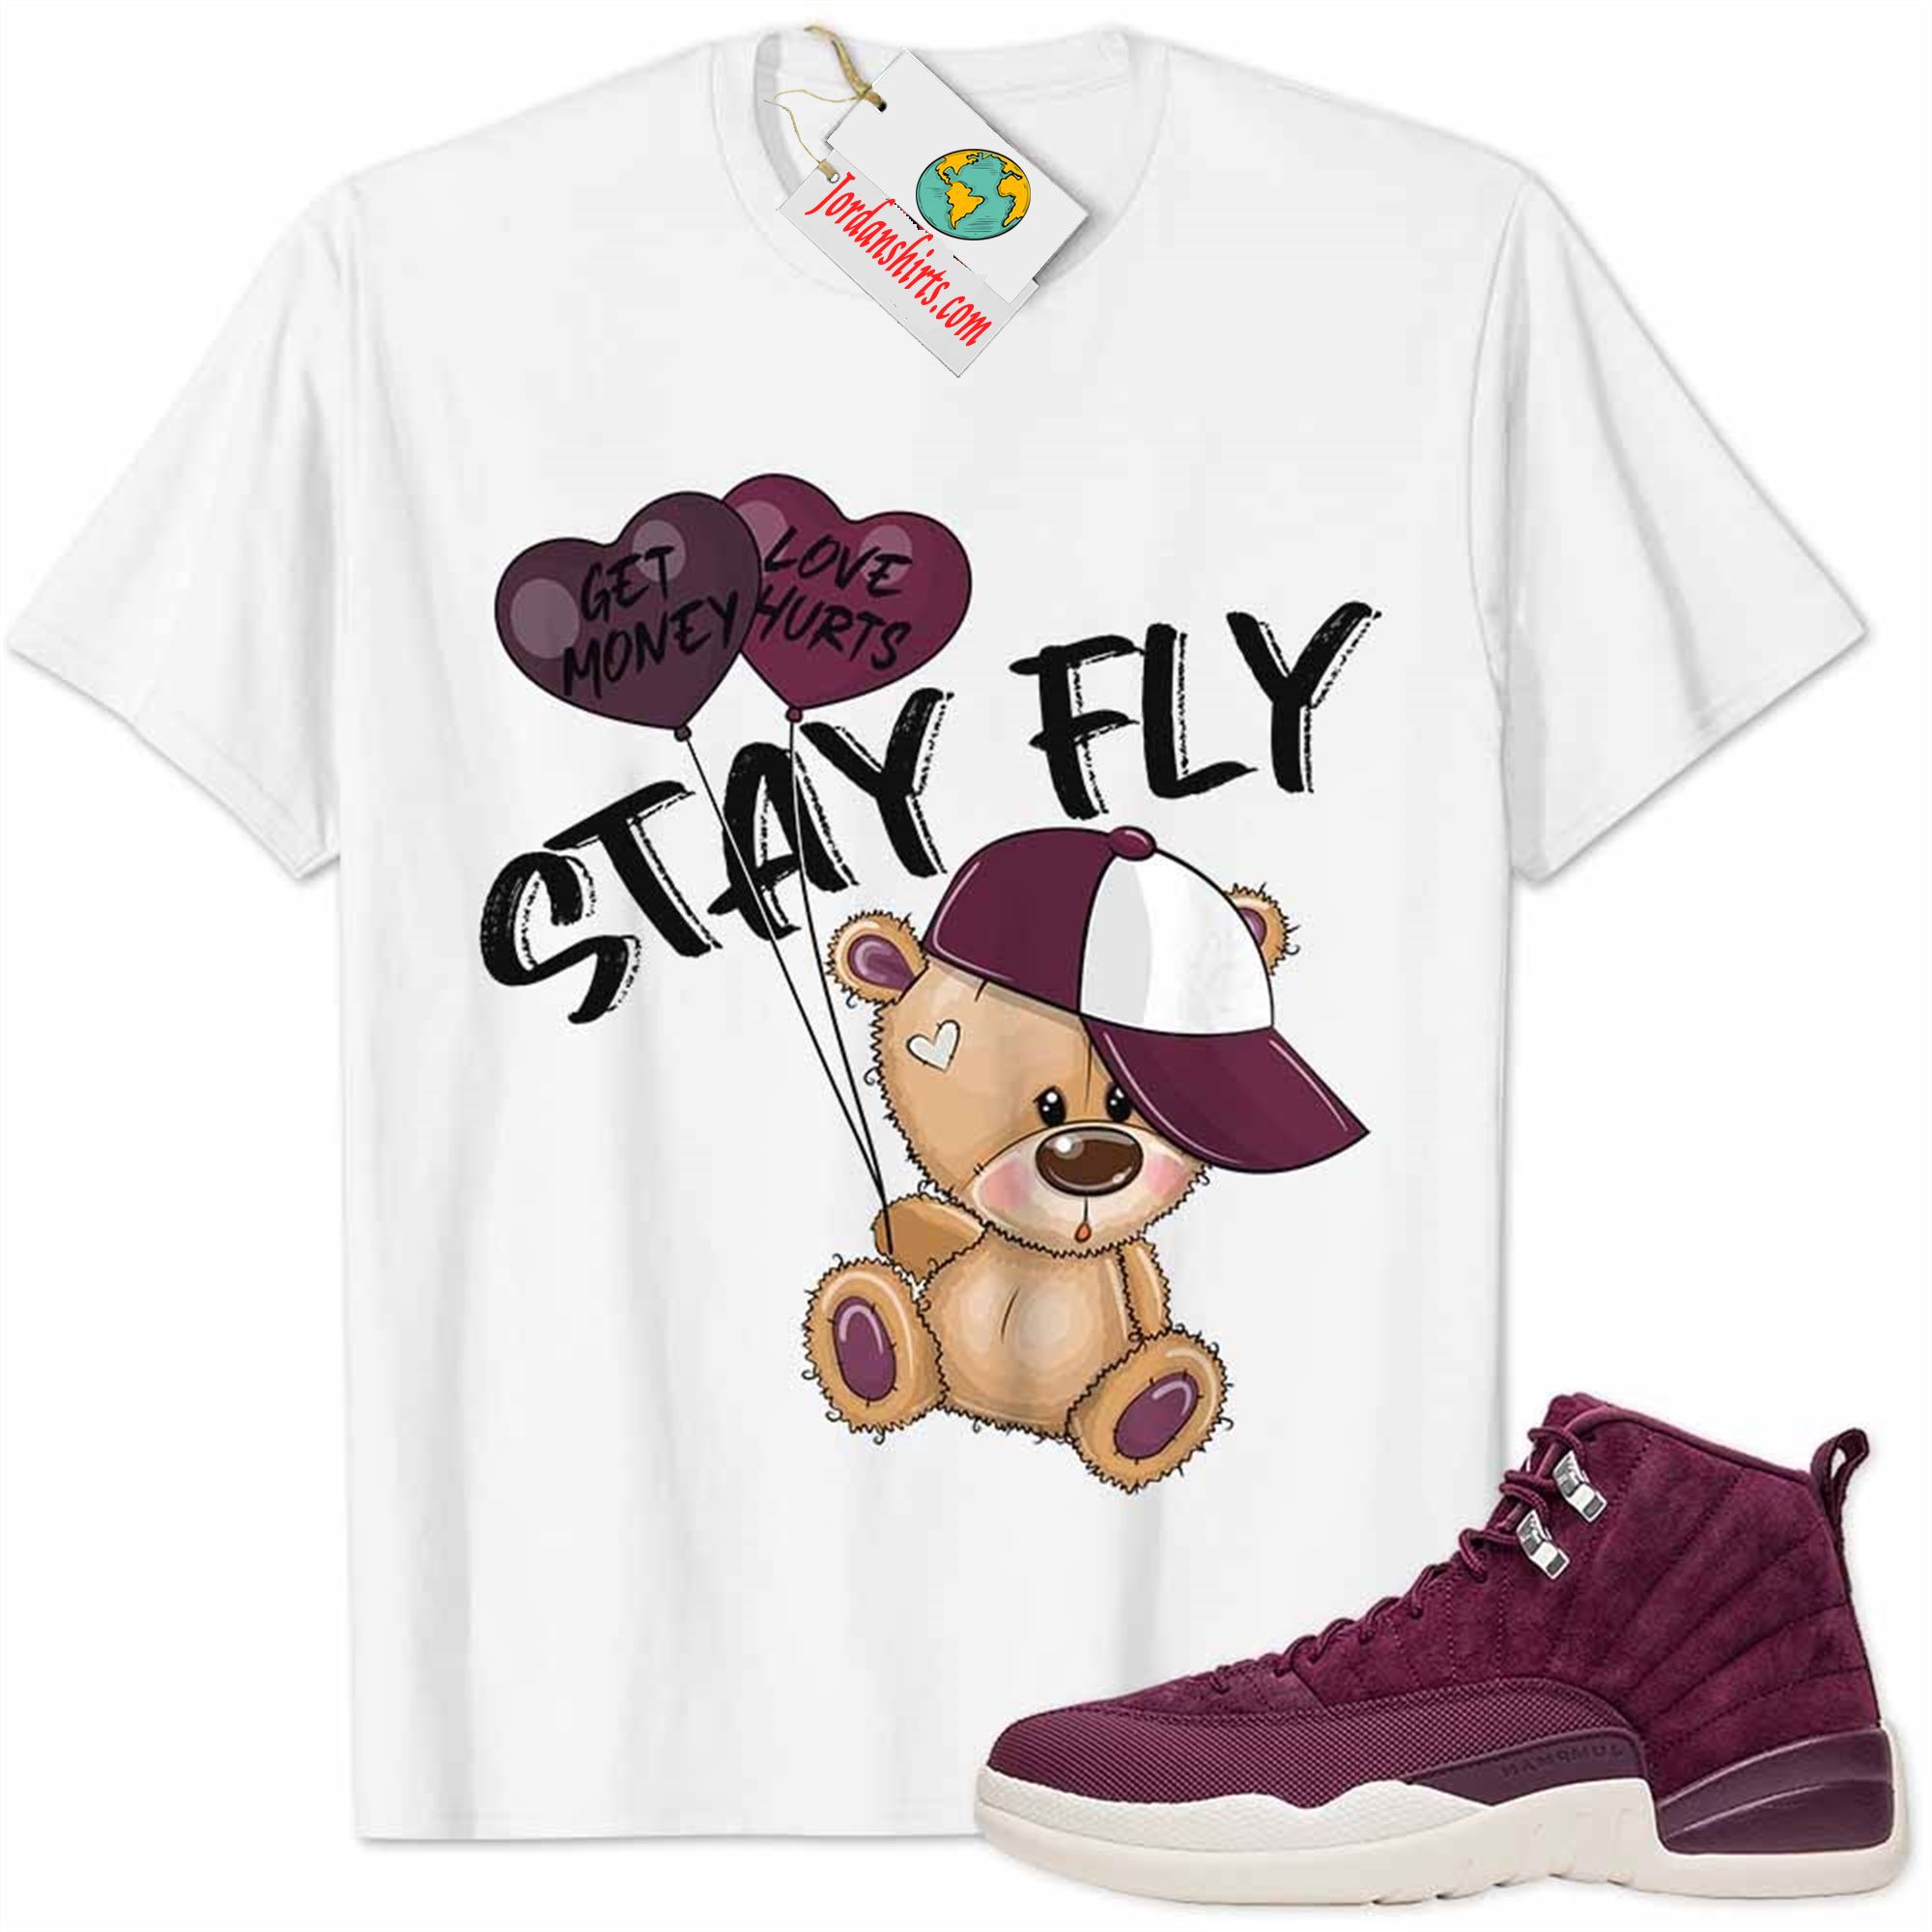 Jordan 12 Shirt, Bordeaux 12s Shirt Cute Teddy Bear Stay Fly Get Money White Full Size Up To 5xl